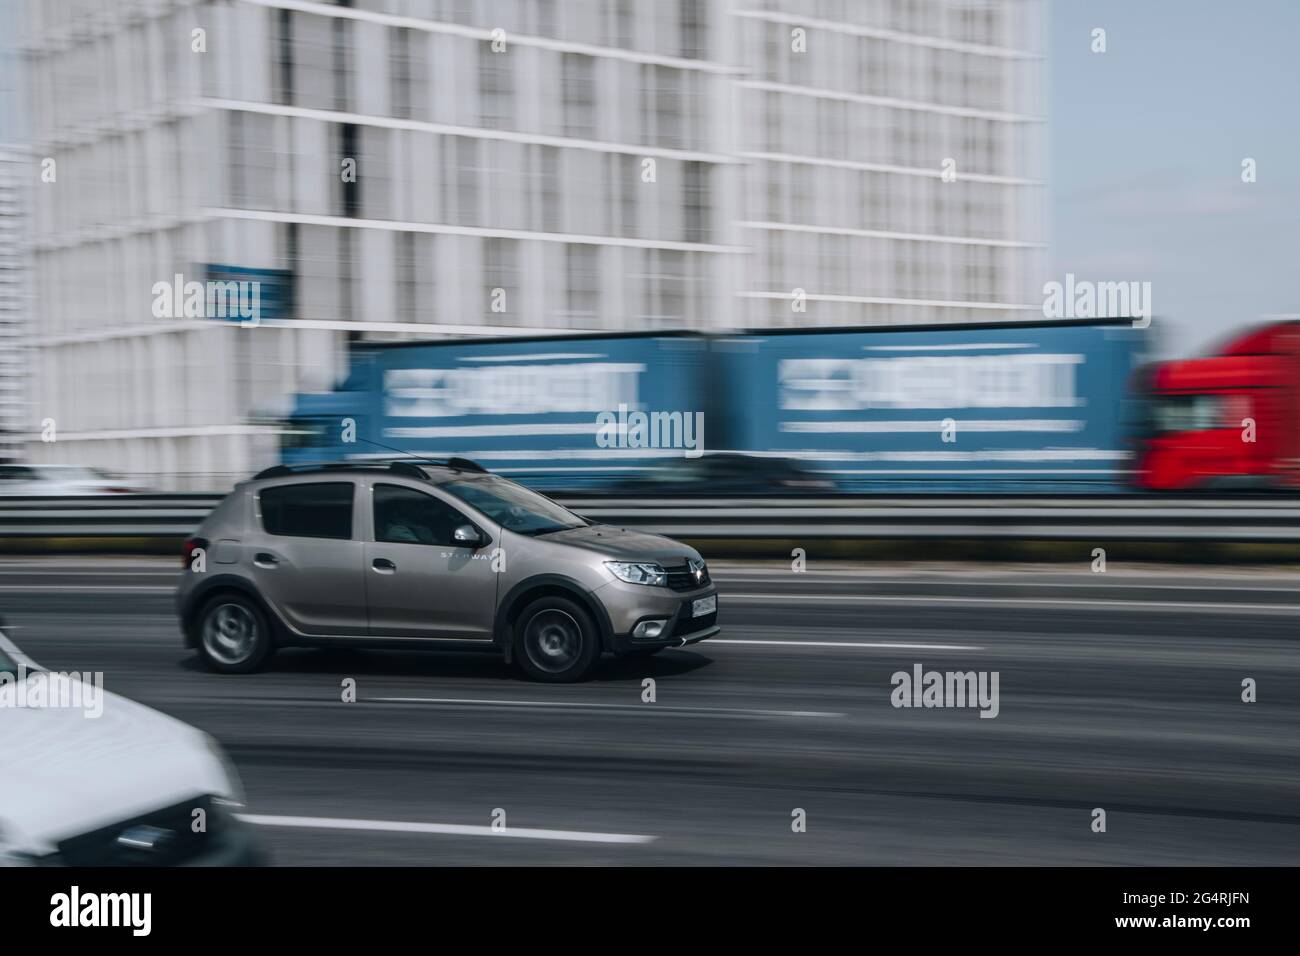 Ukraine, Kyiv - 29 April 2021: Silver Dacia Sandero car moving on the street. Editorial Stock Photo